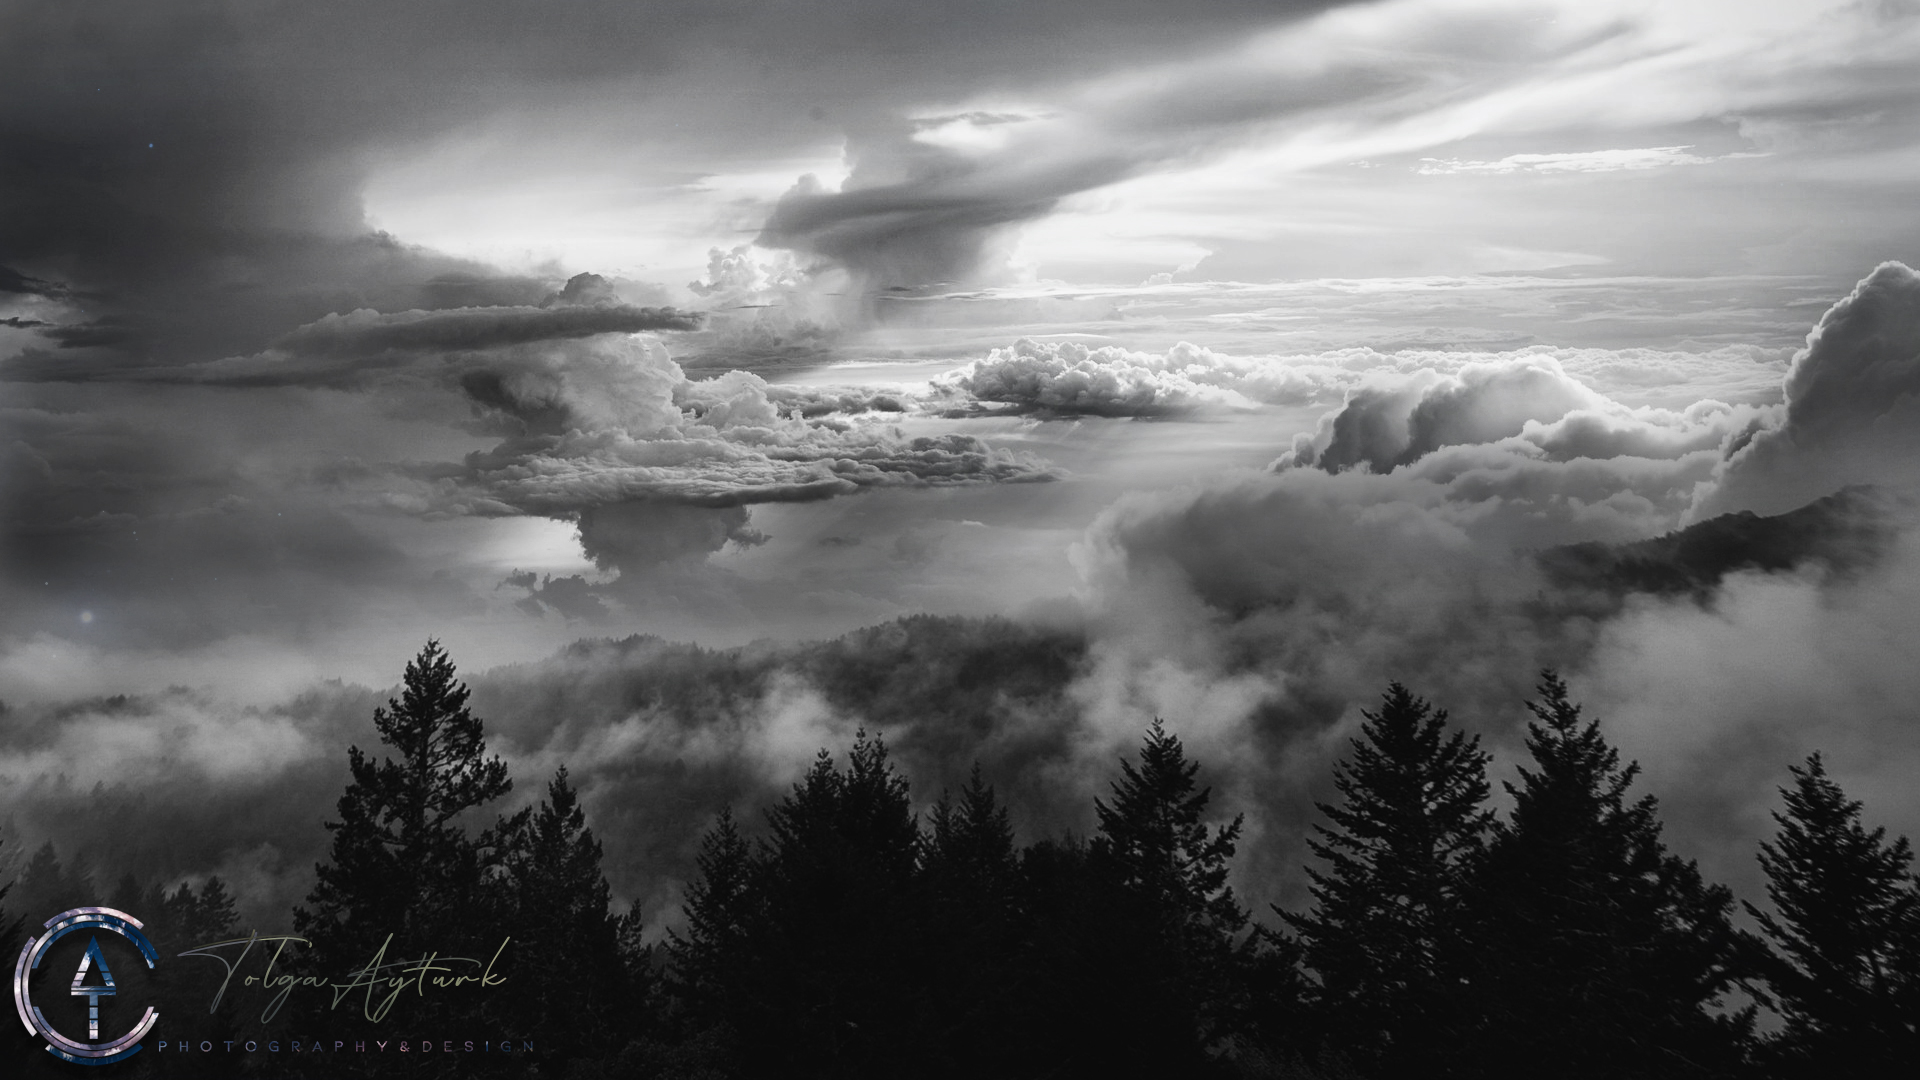 General 1920x1080 mountains nature landscape trees plants monochrome digital art photo manipulation clouds